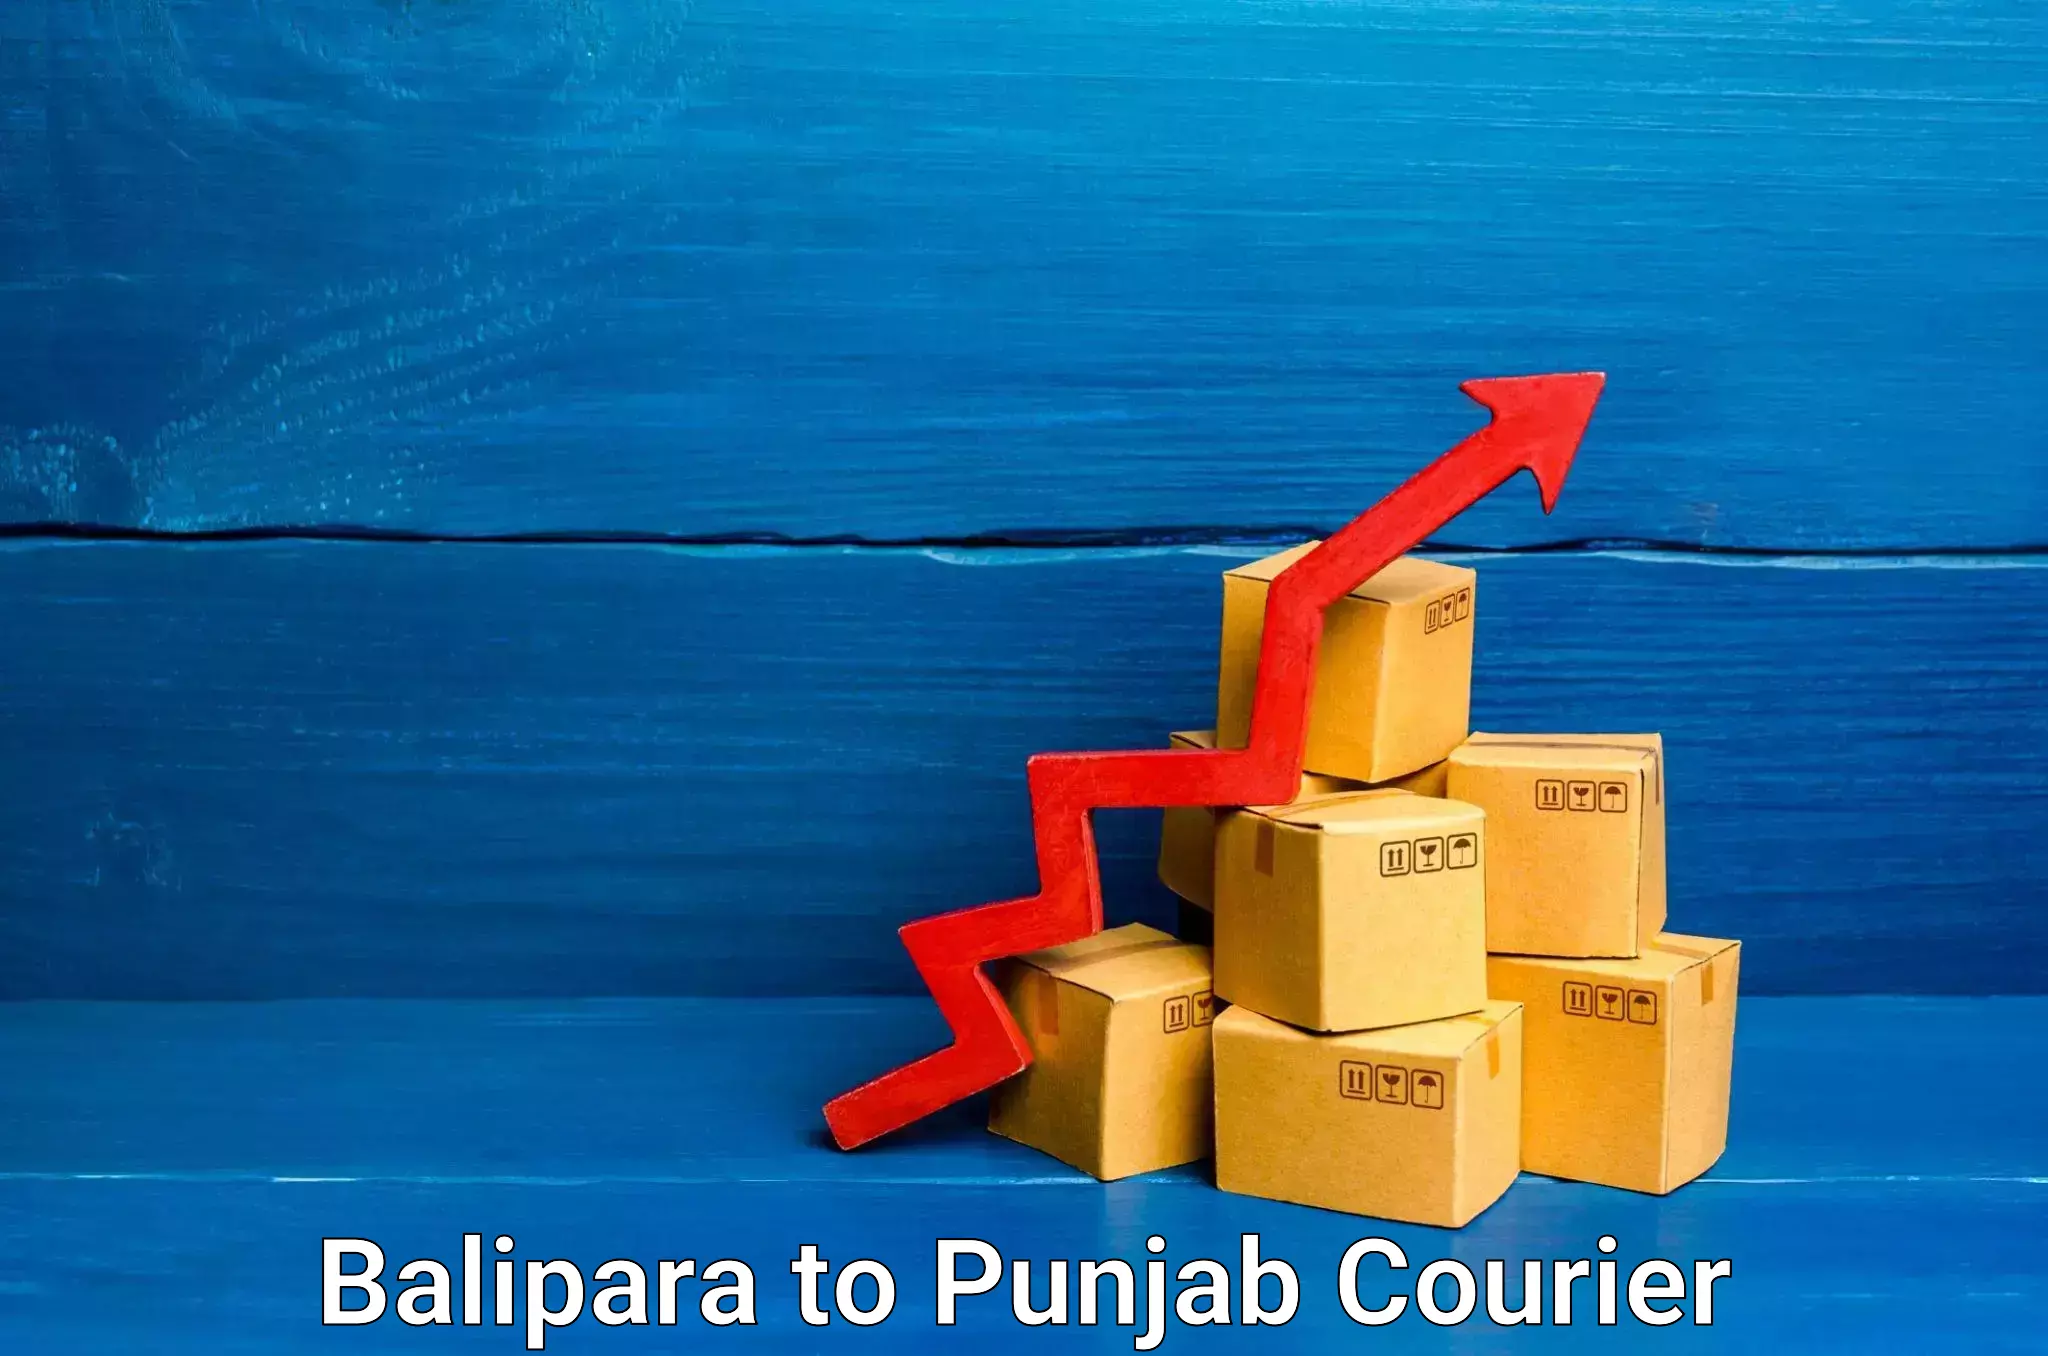 Courier service innovation Balipara to Bathinda